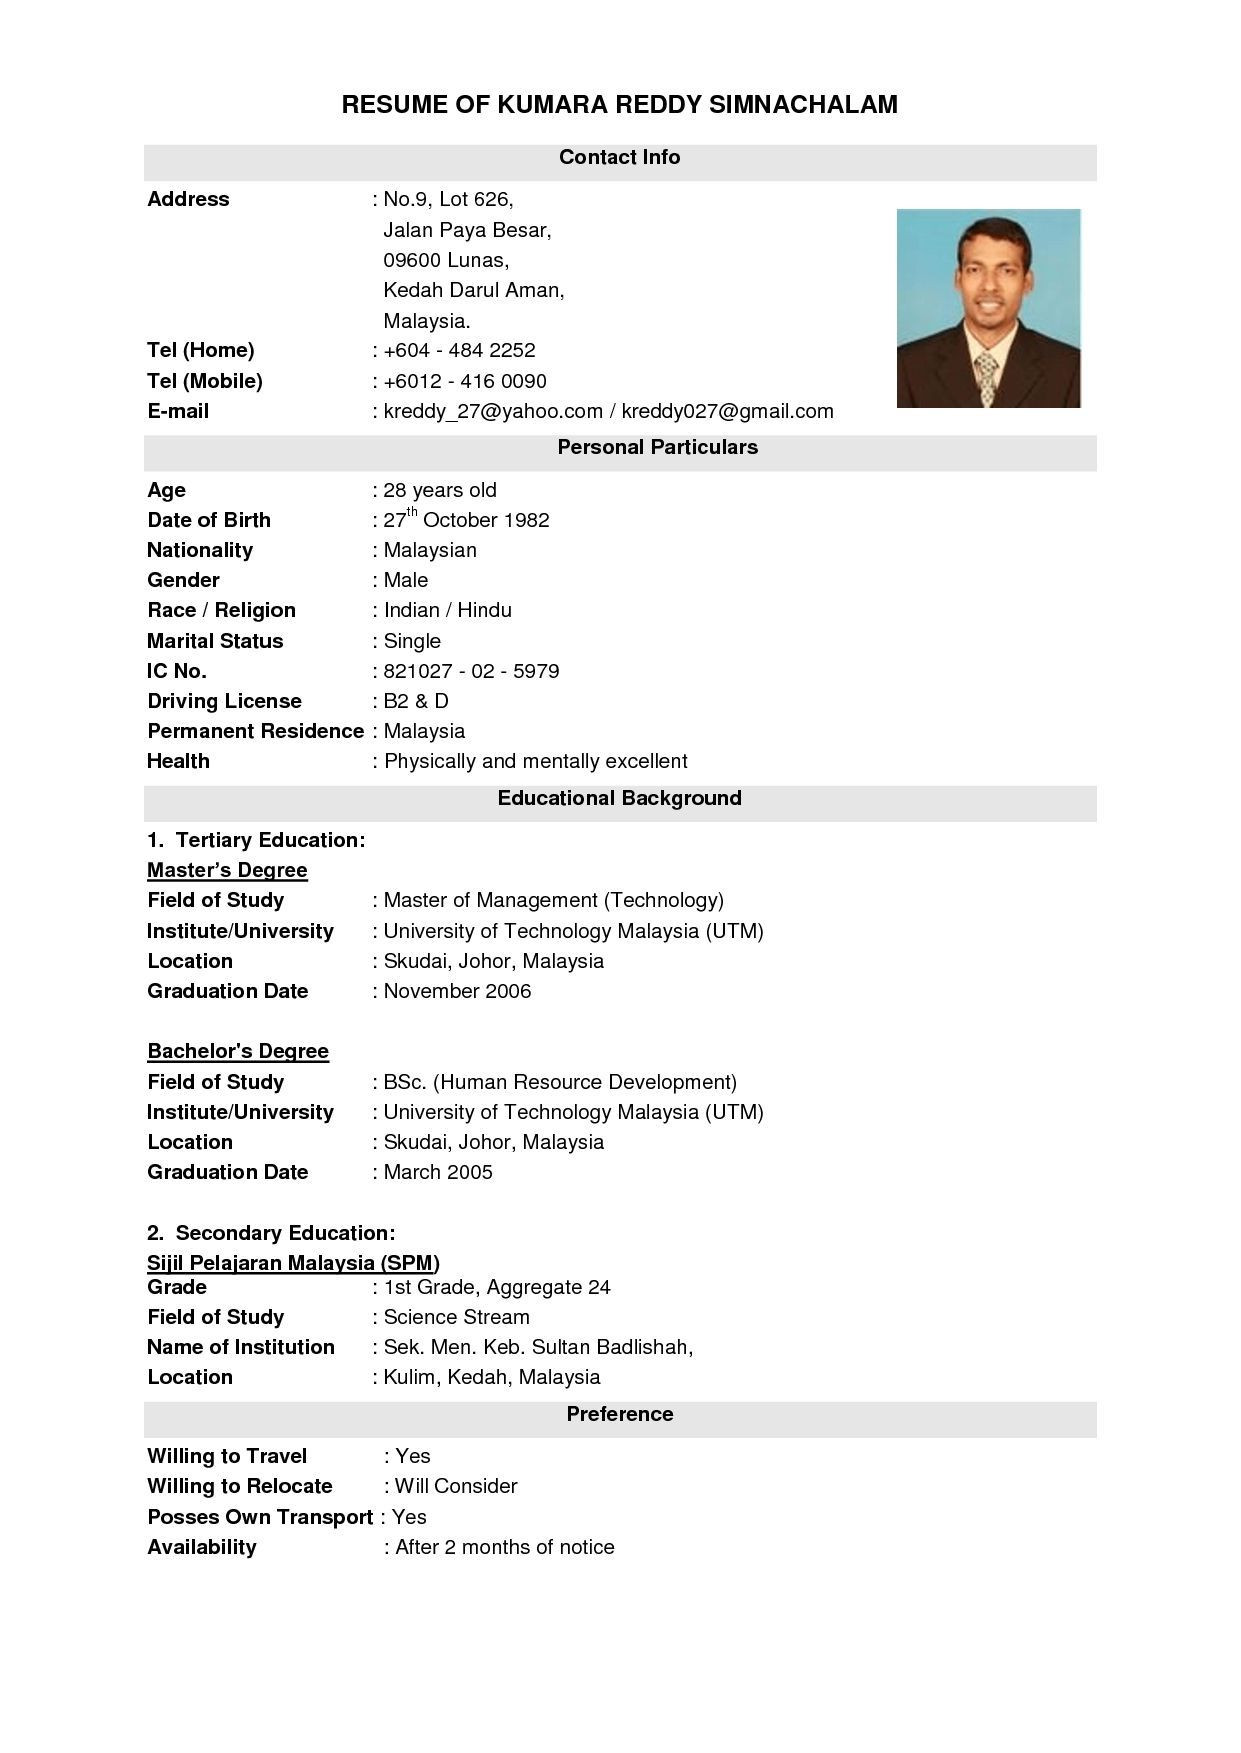 job resume format